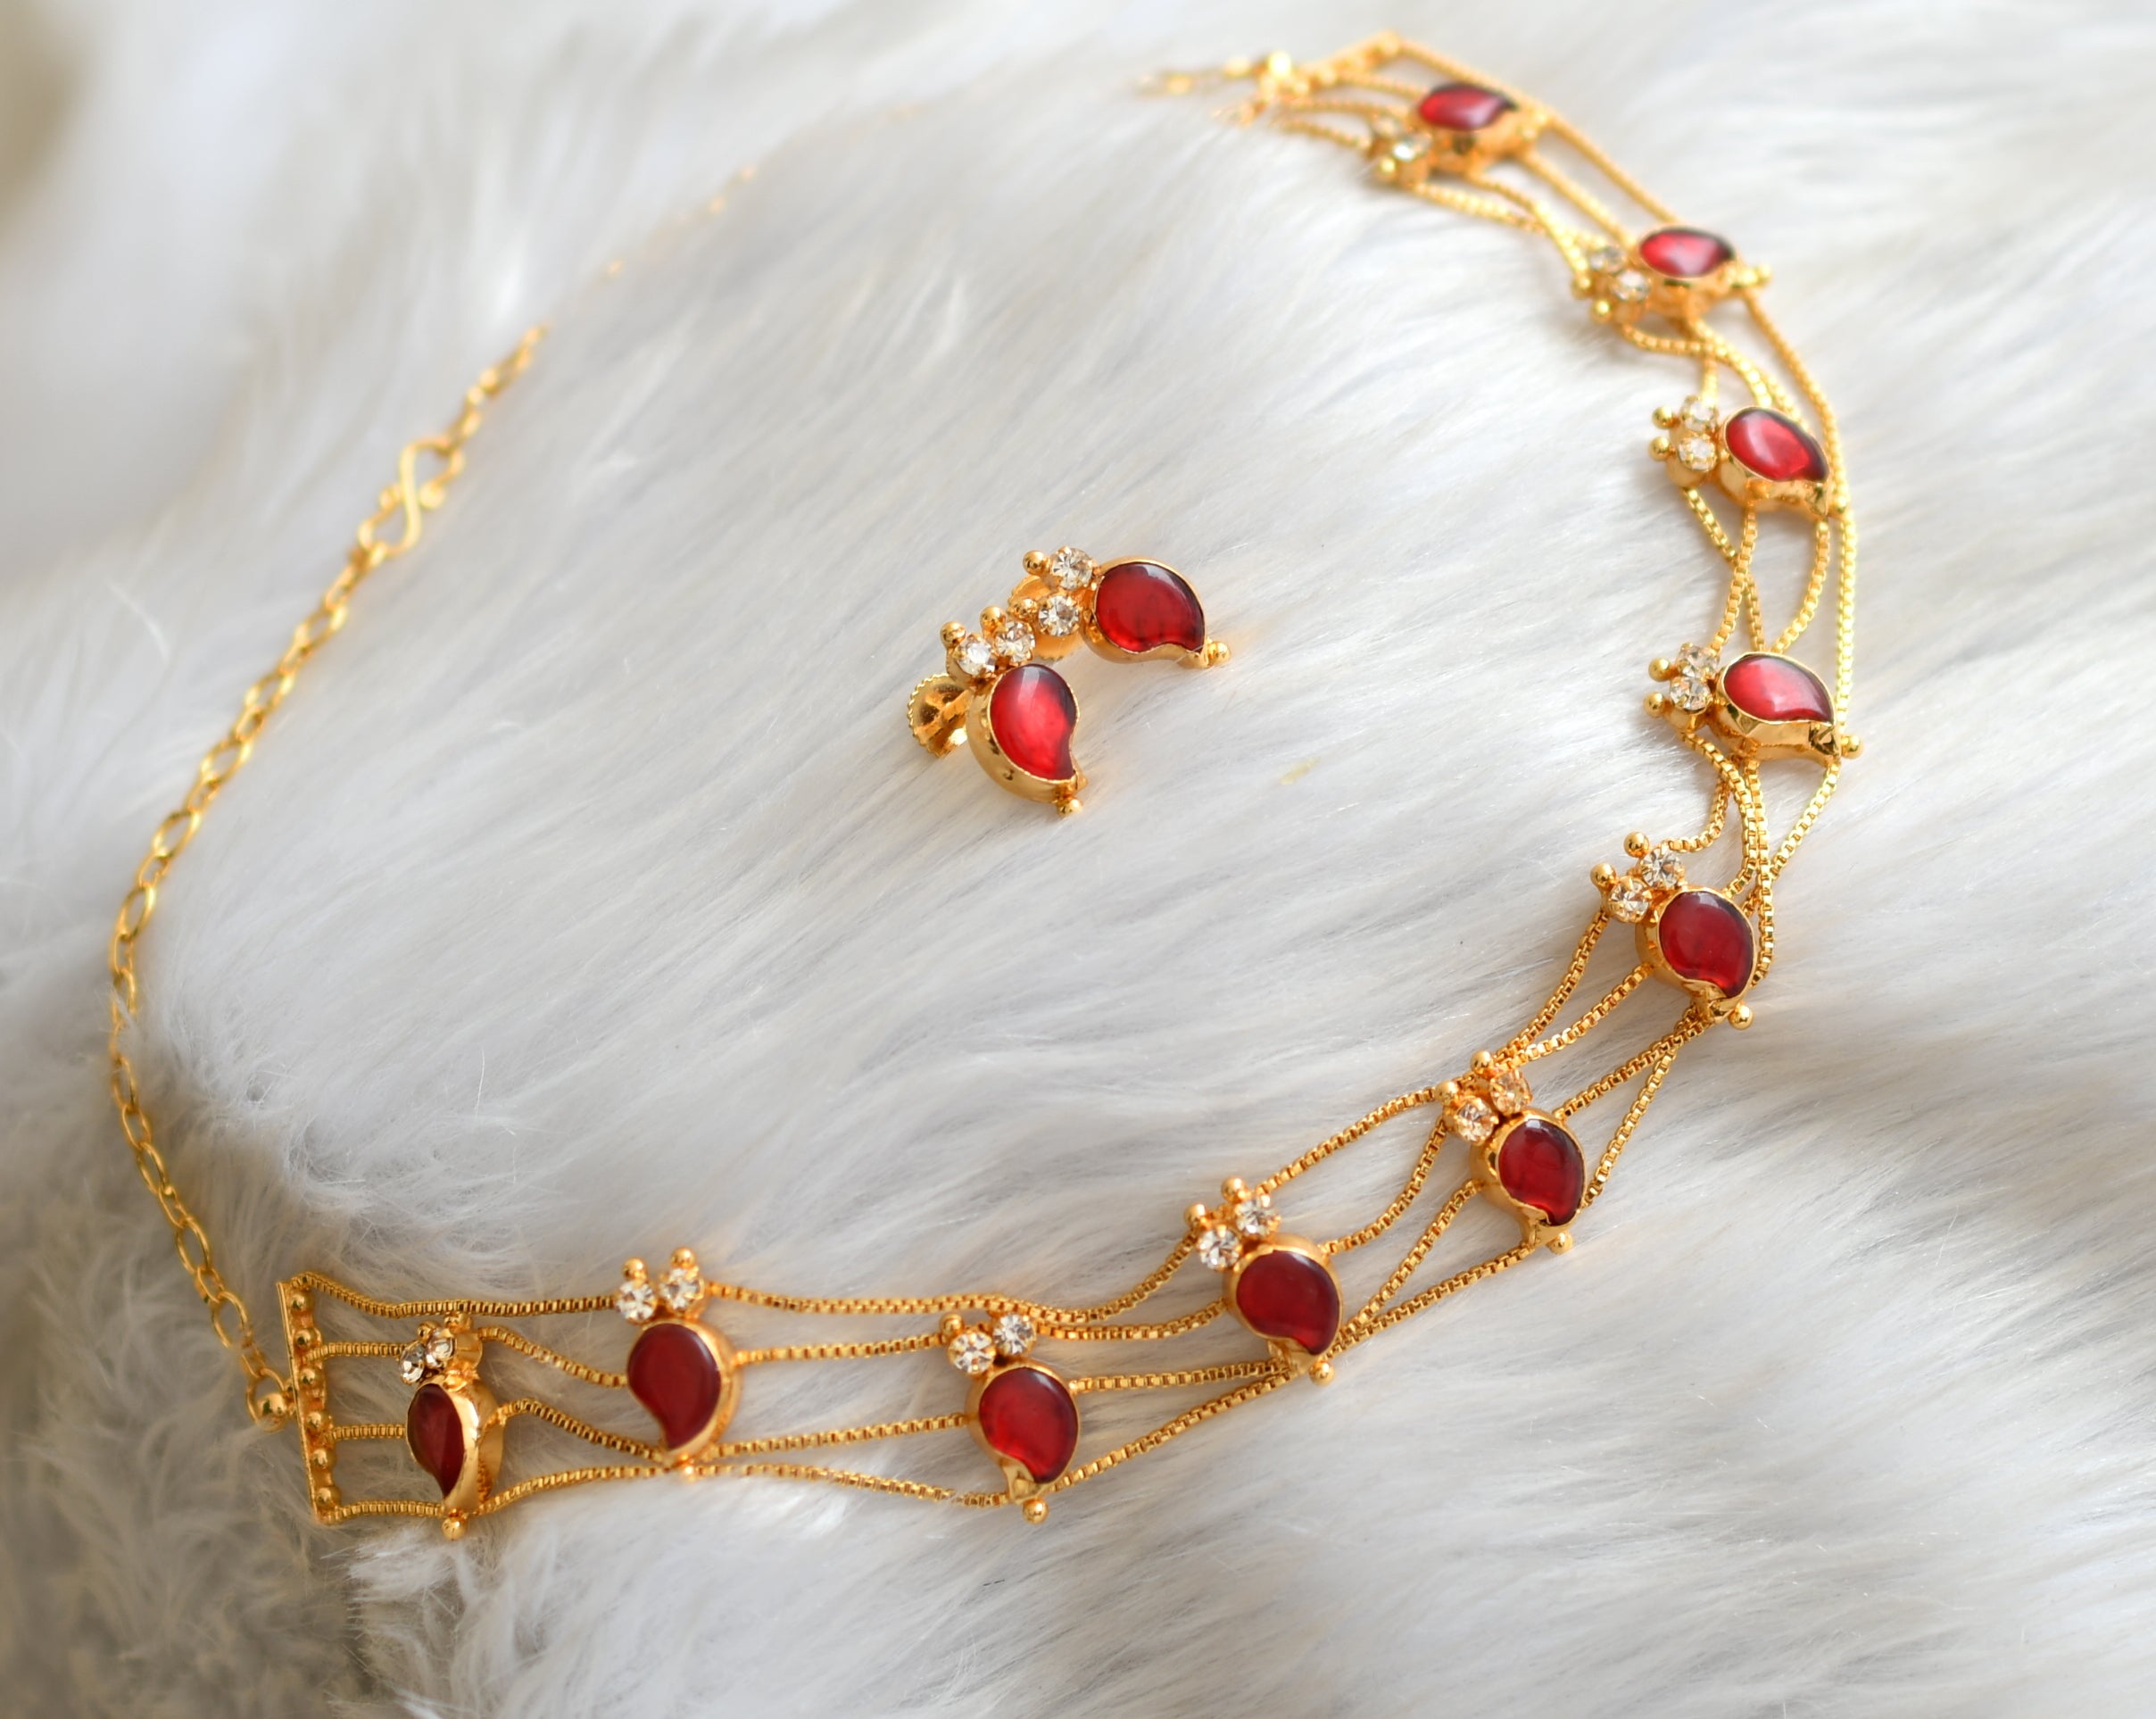 Swarovski Swan Necklace - Iconic Pendant in Red